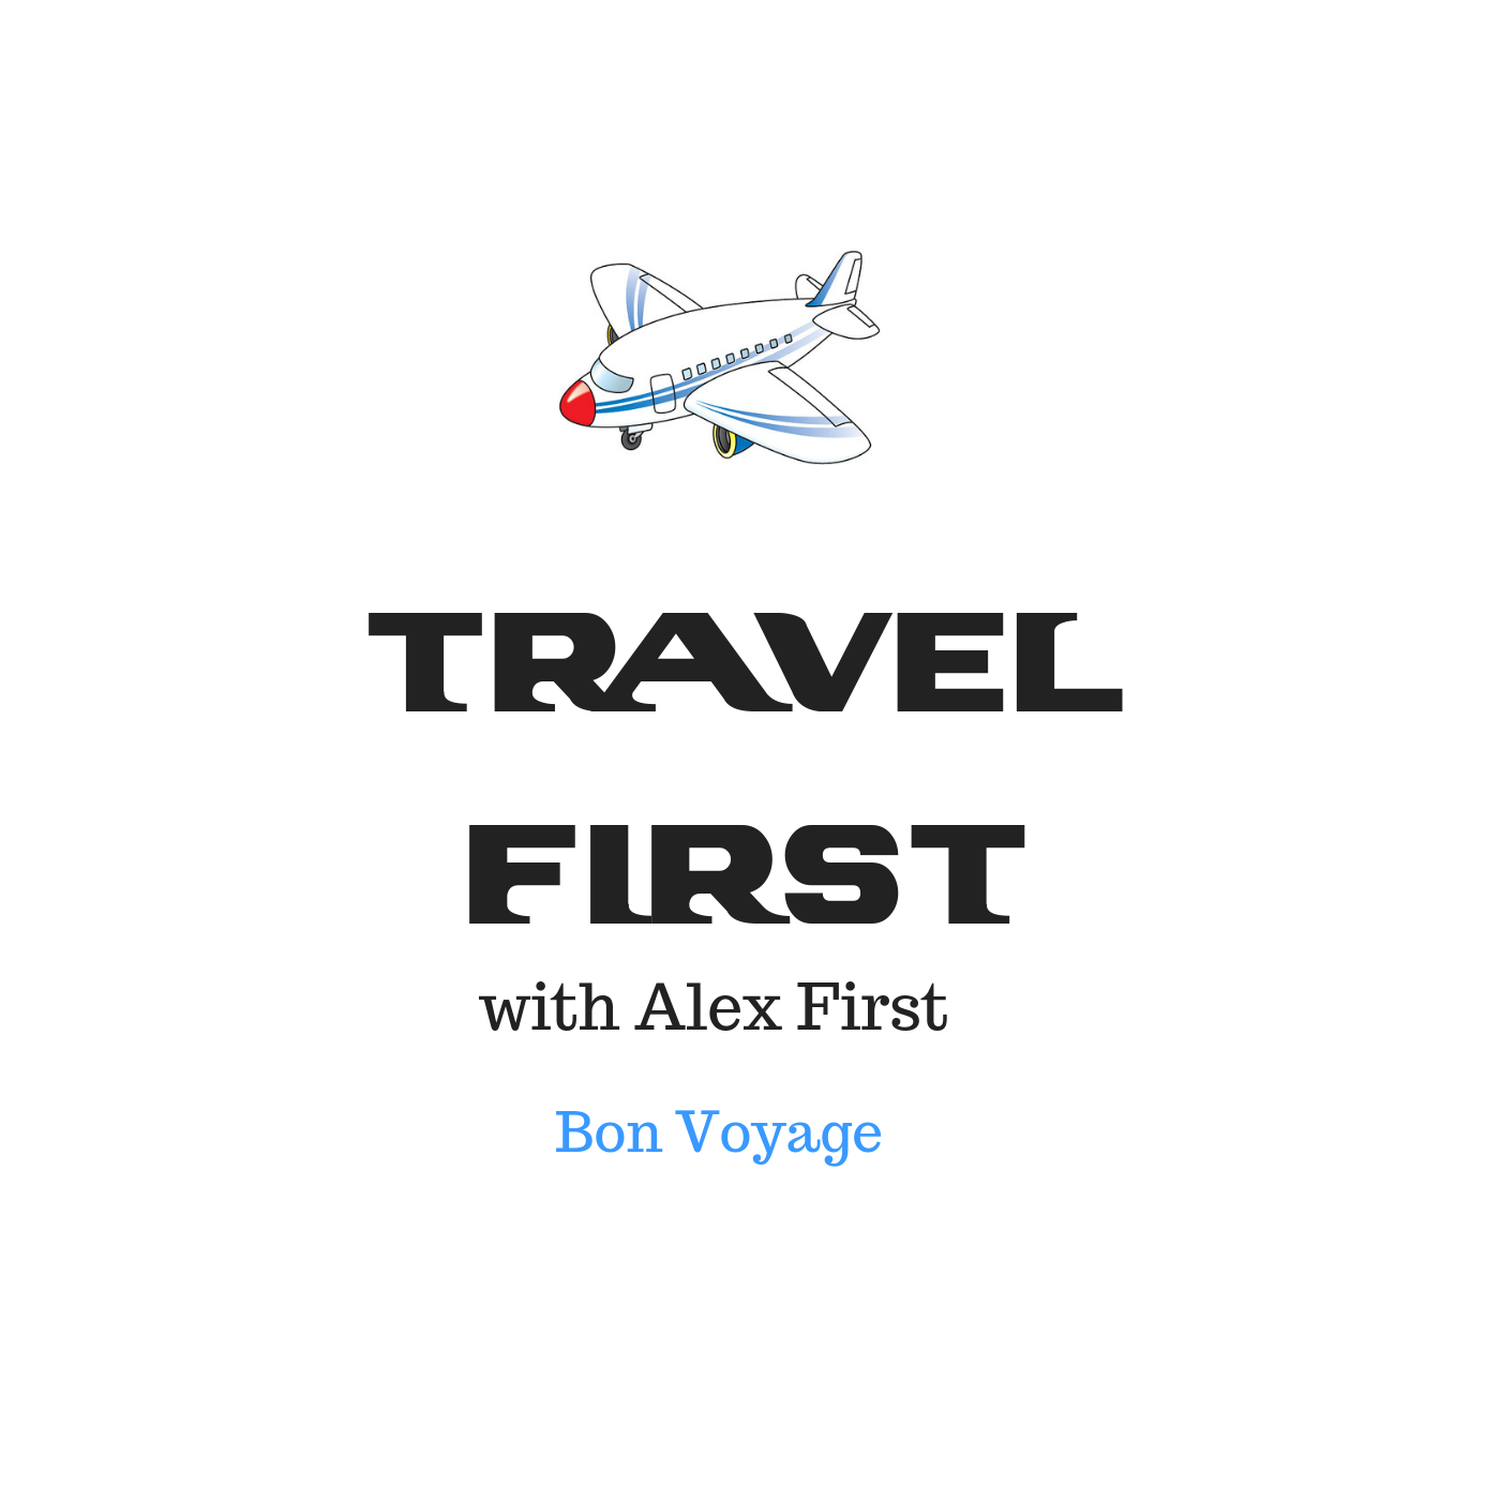 26: Hobart, Tasmania, Australia - Part 2 - Travel First with Alex First & Chris Coleman Episode 25